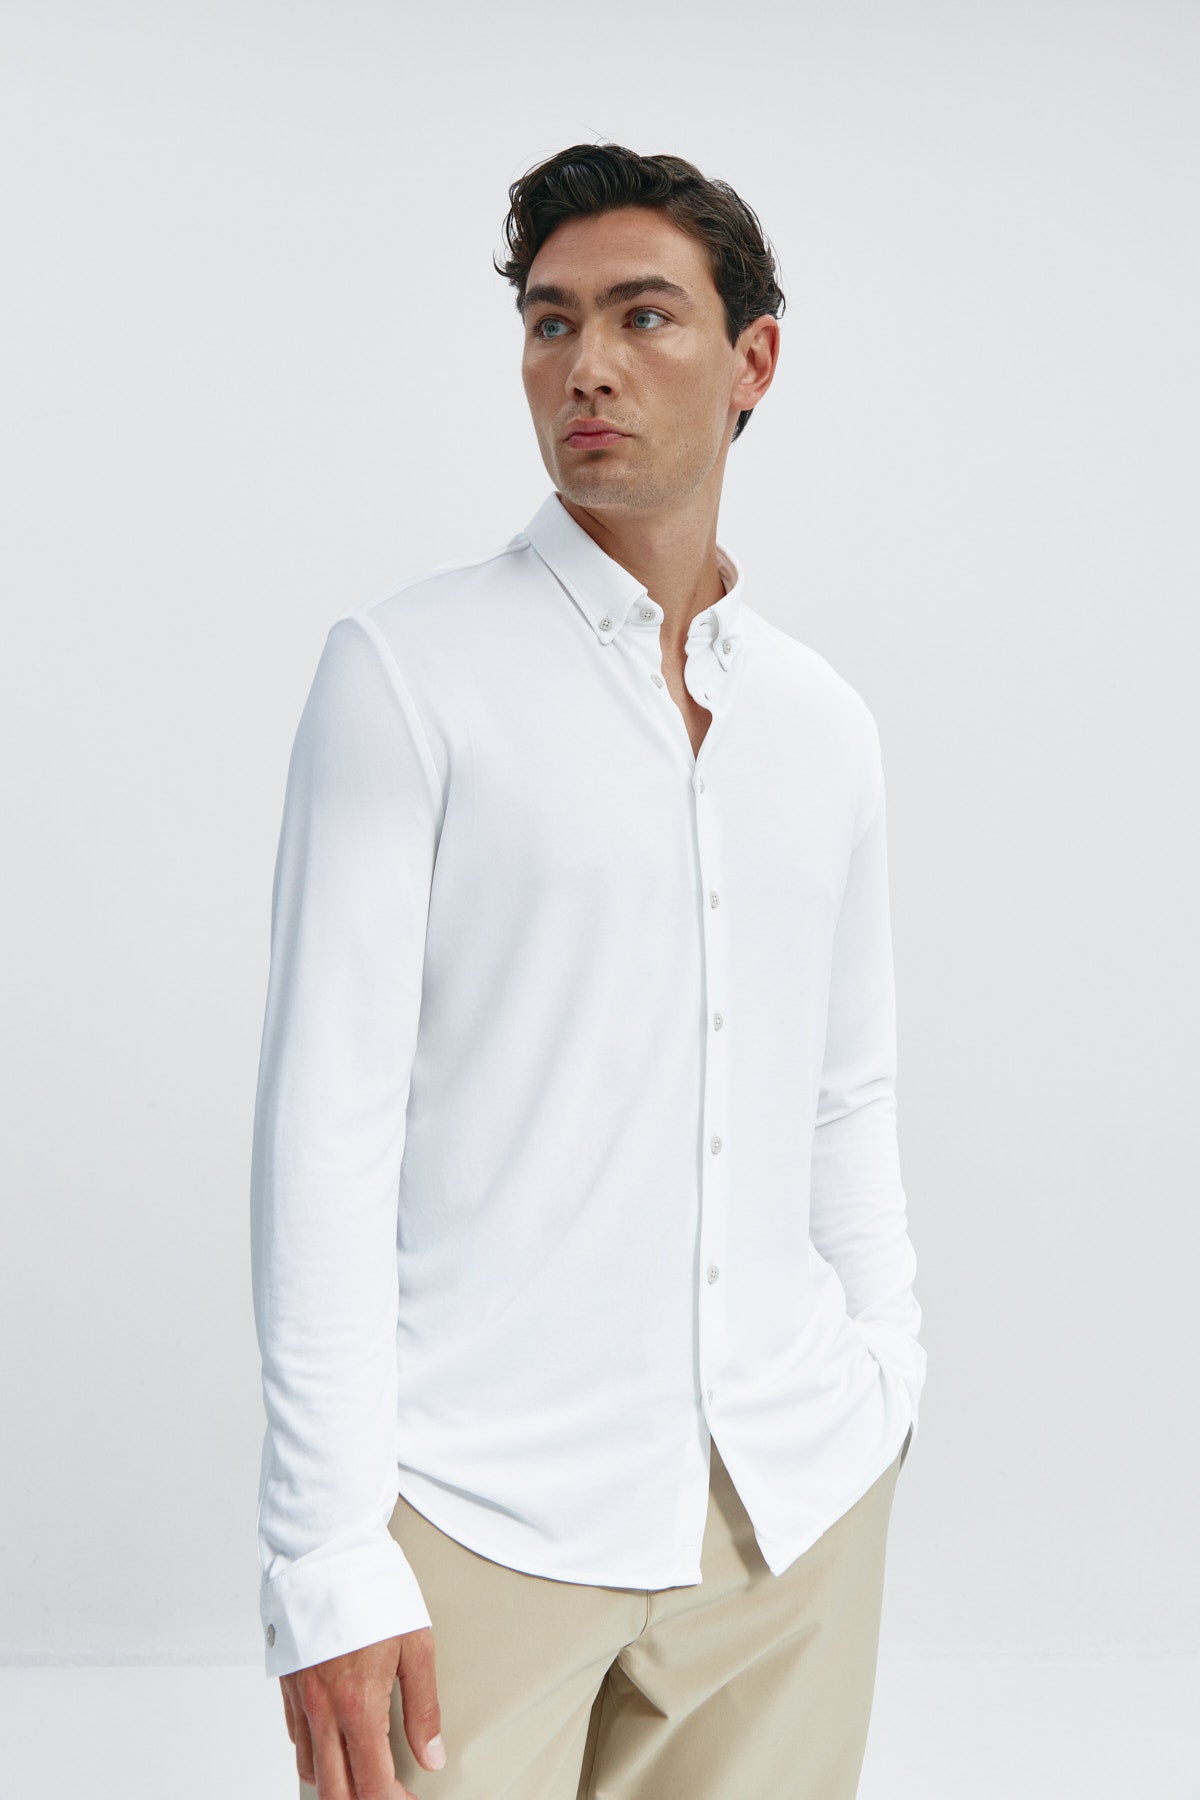 Camisa casual blanca para hombre sin arrugas ni manchas. Manga larga, antiarrugas y antimanchas. Foto frente